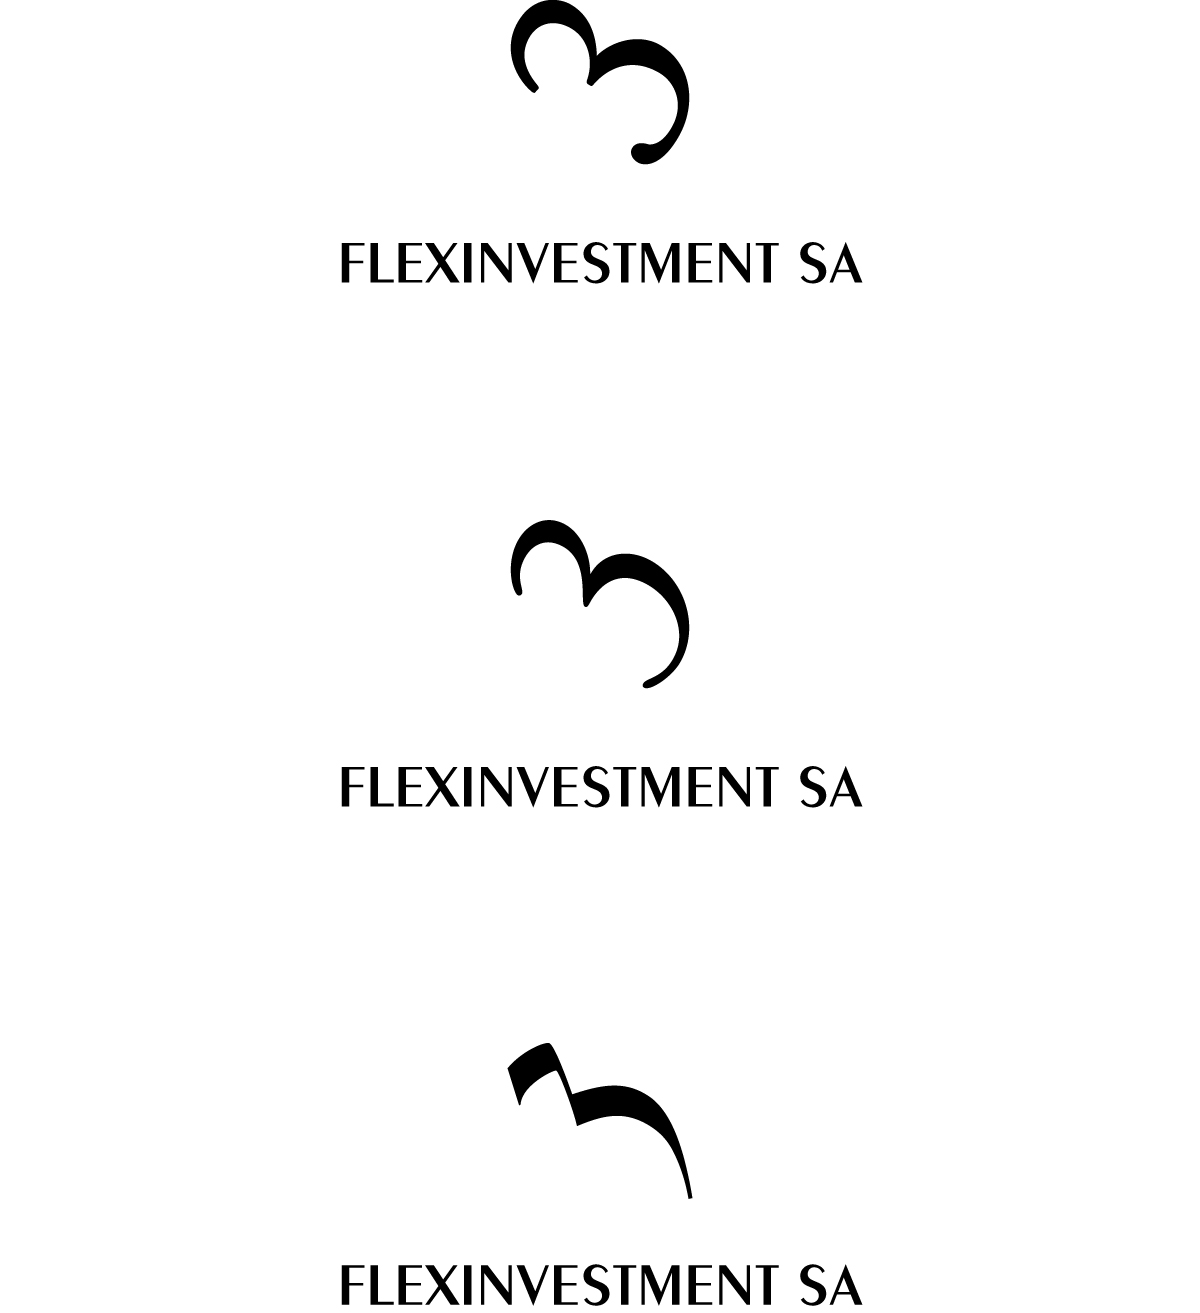 Flexinvestment proposition logo